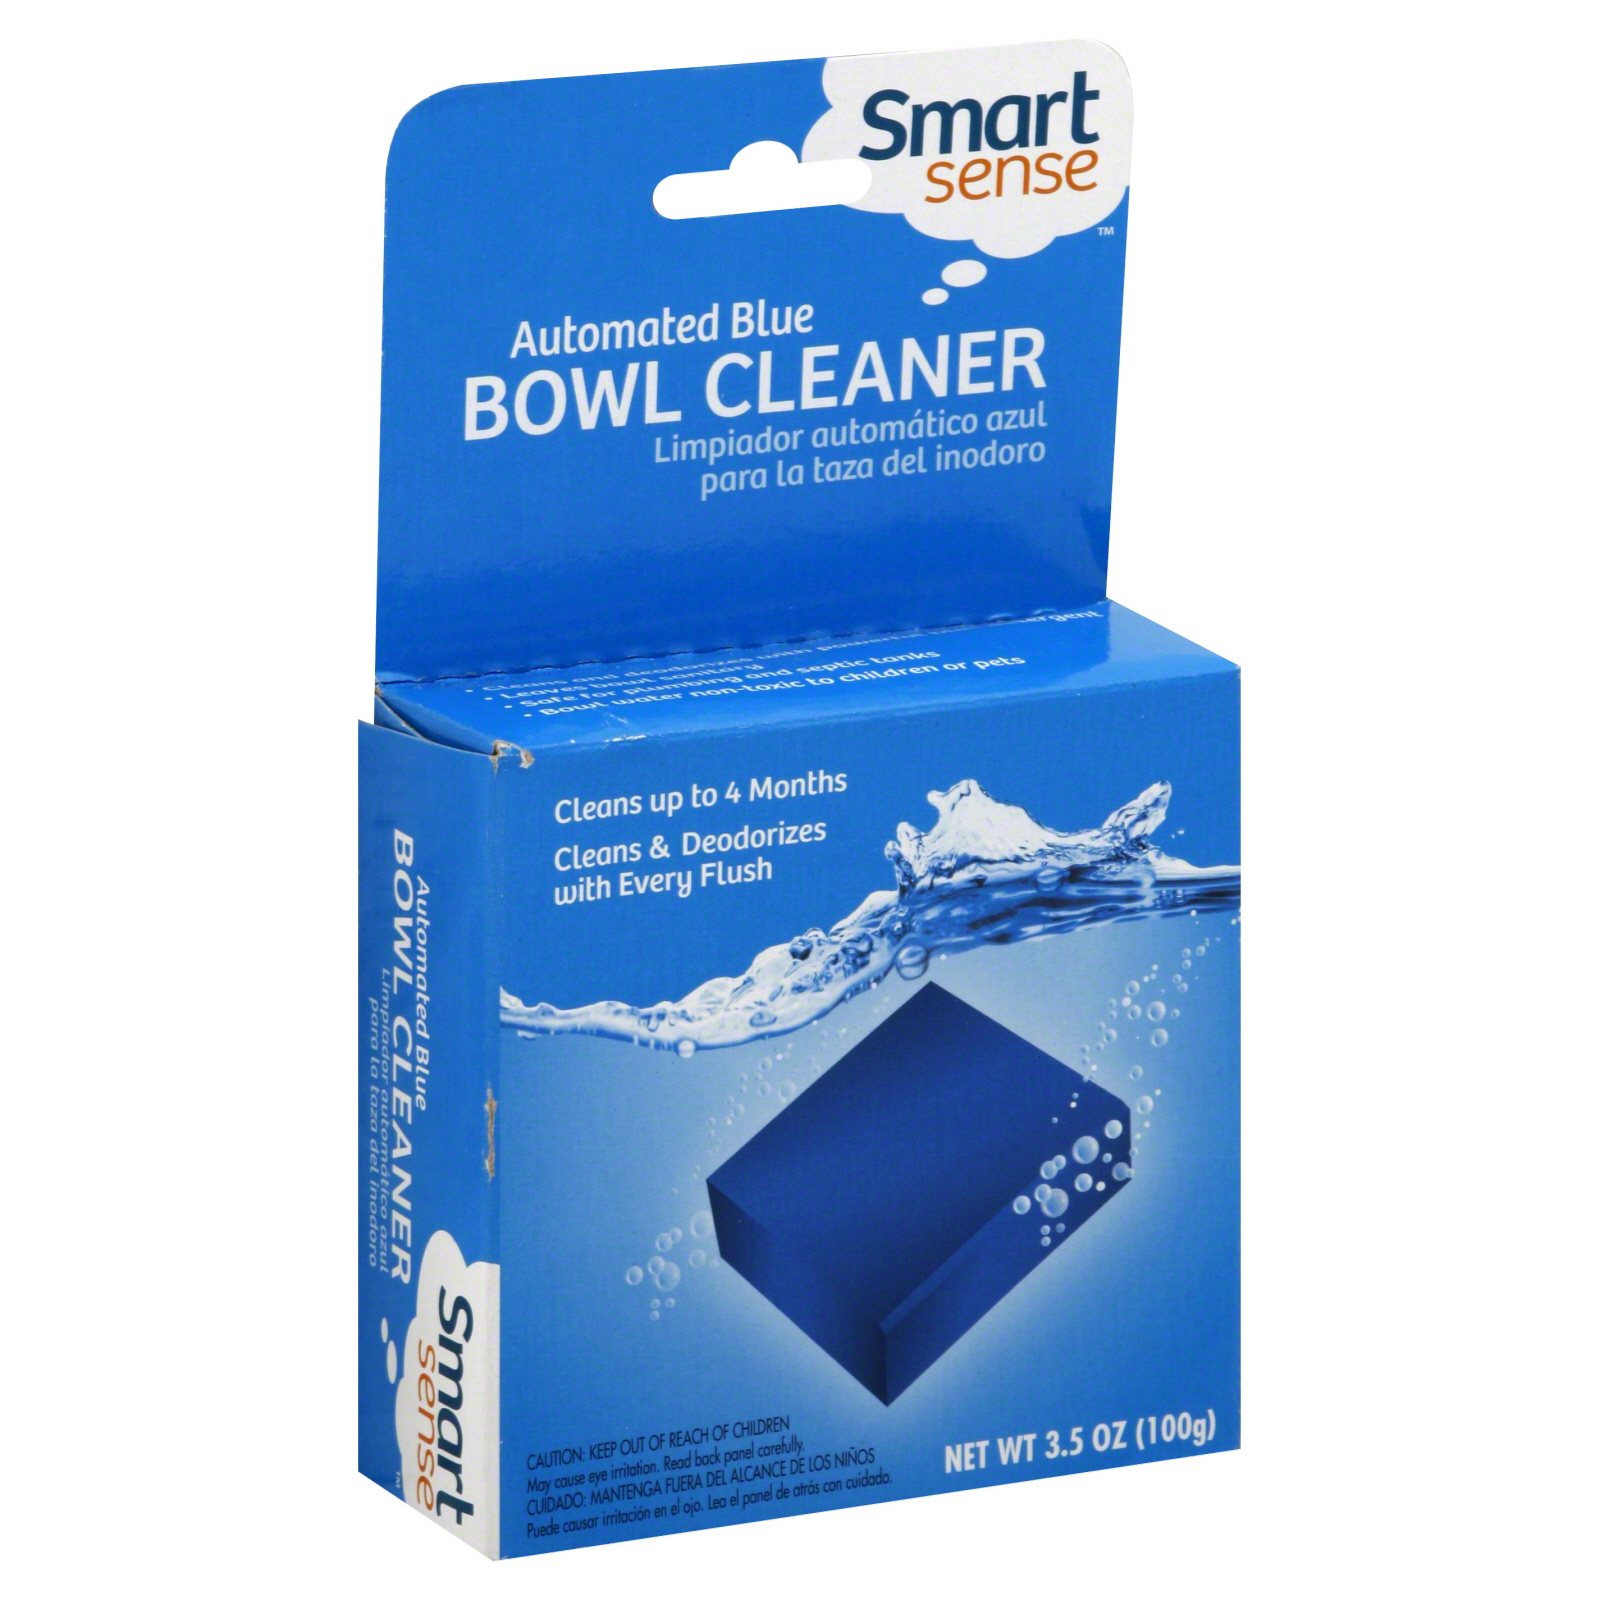 Smart Sense Automated Blue Bowl Cleaner, 3.5oz